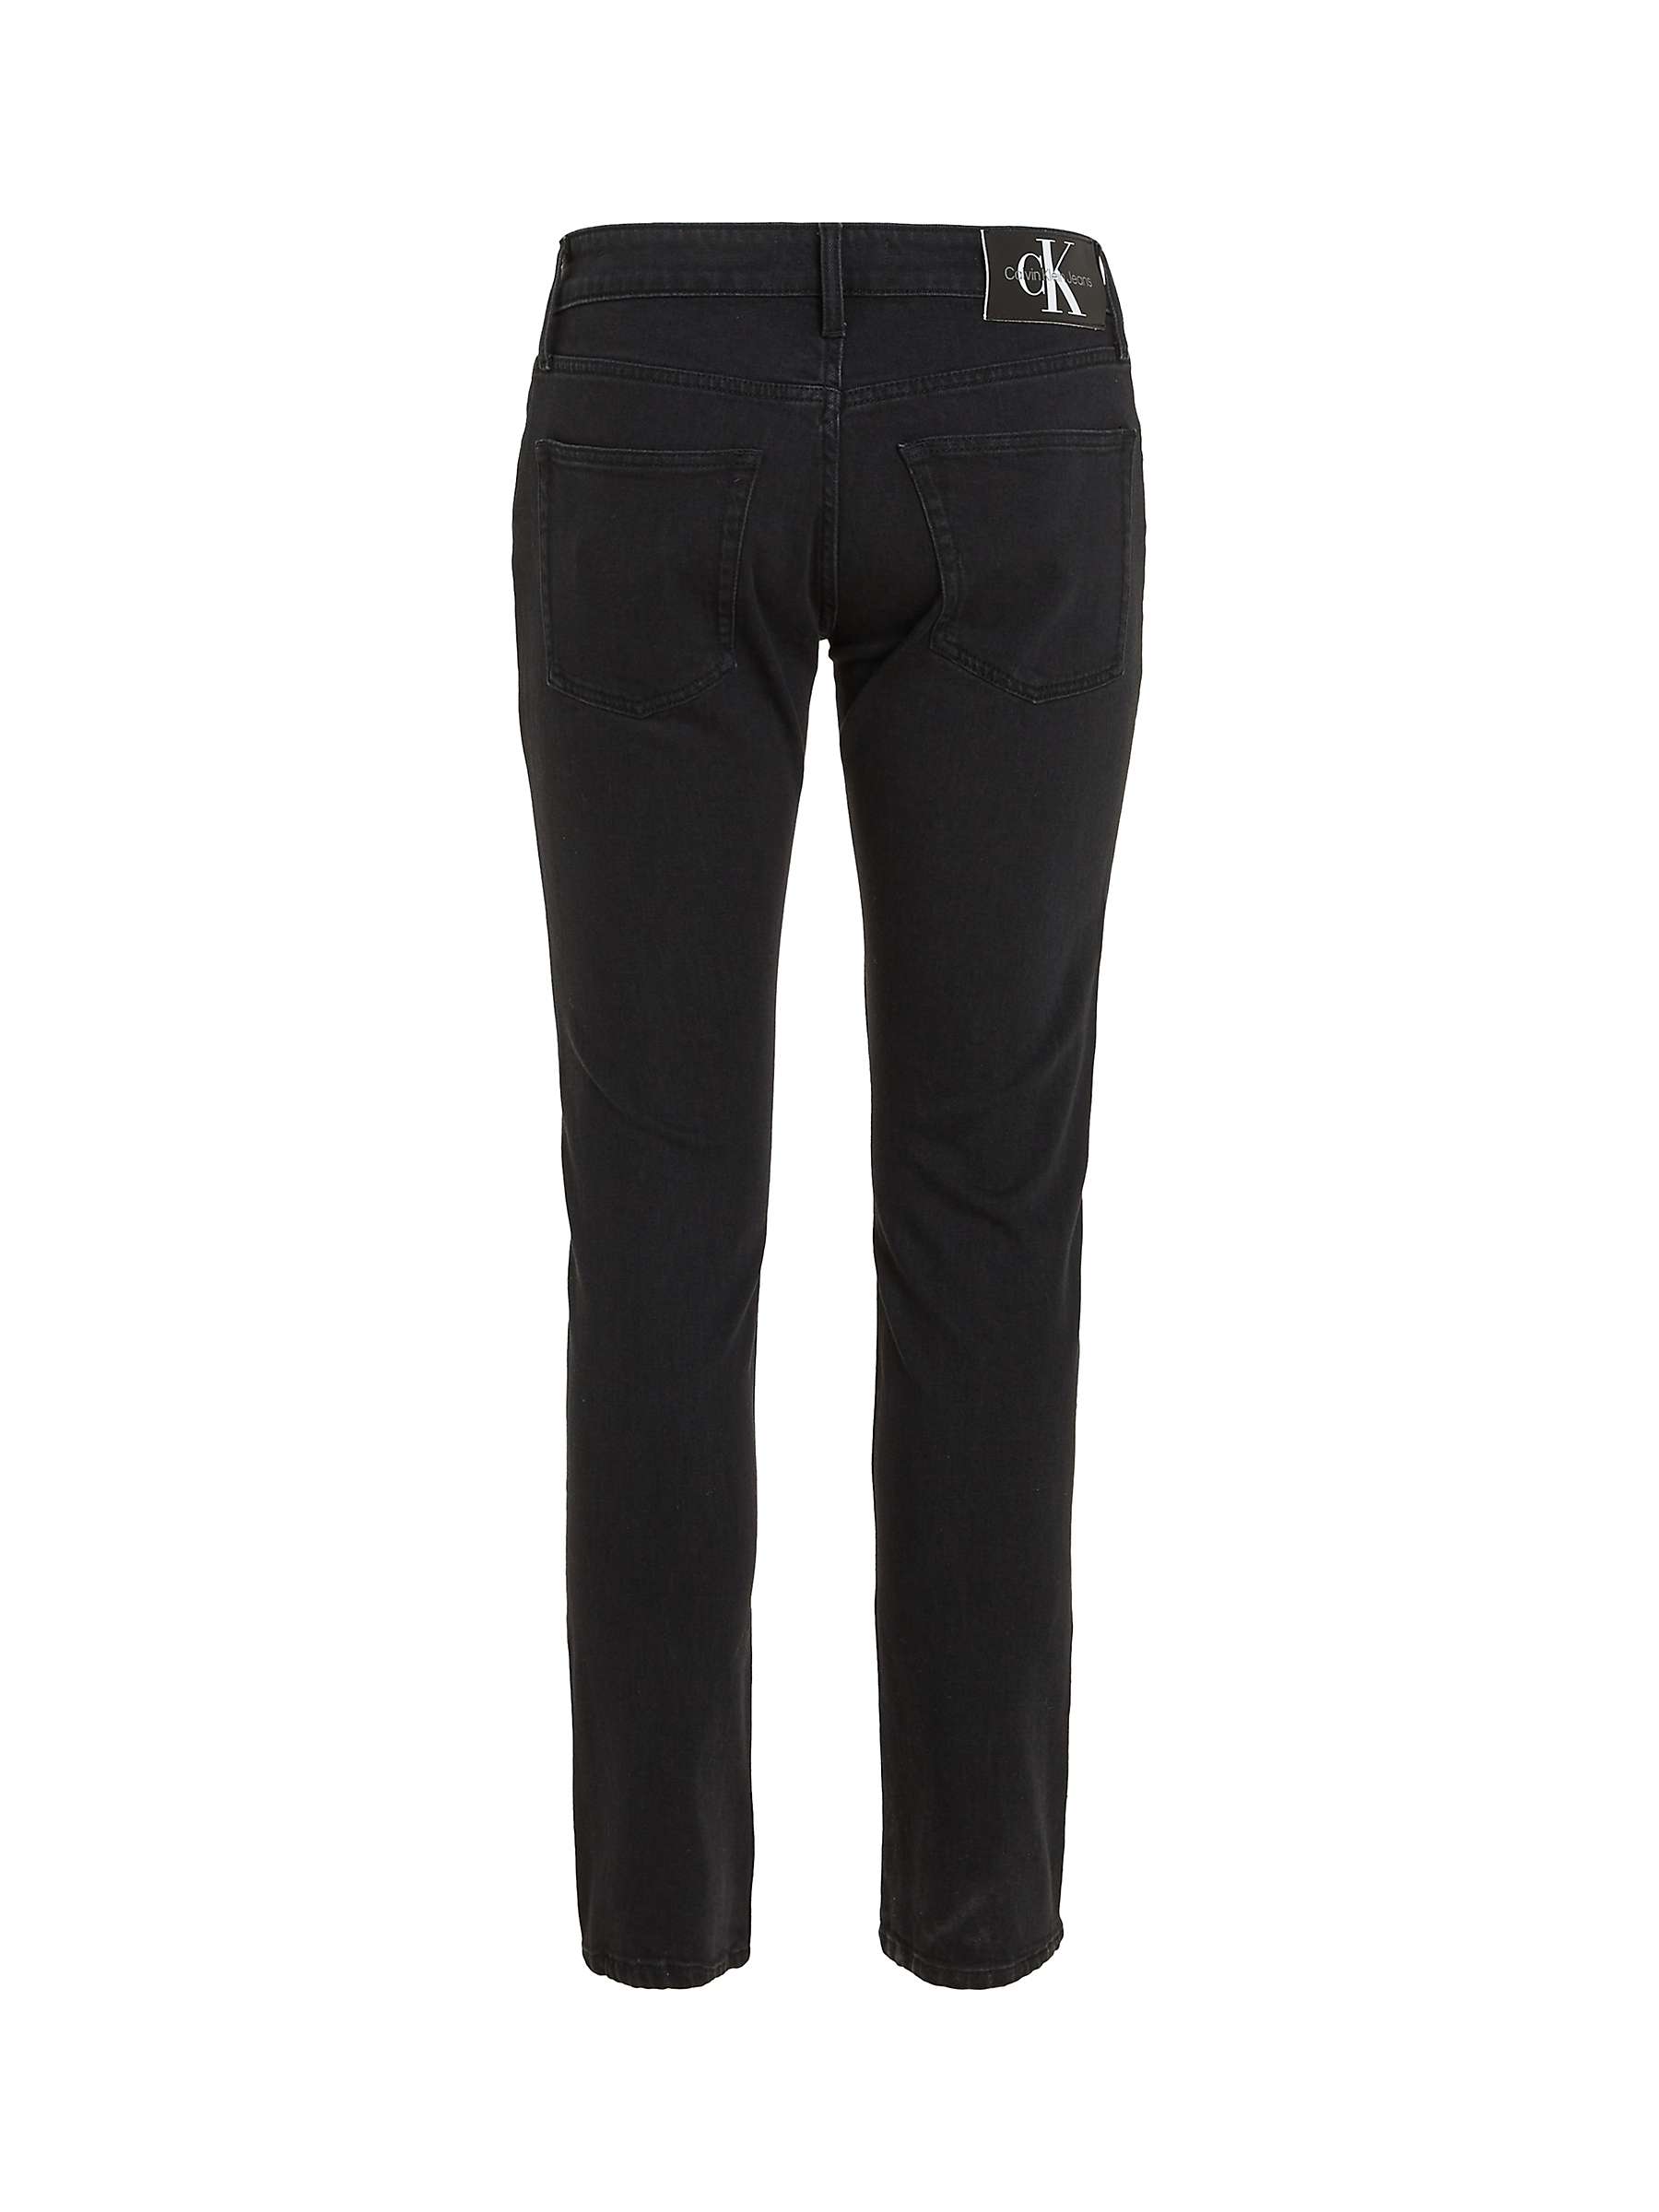 Calvin Klein Slim Fit Jeans, Denim Black at John Lewis & Partners